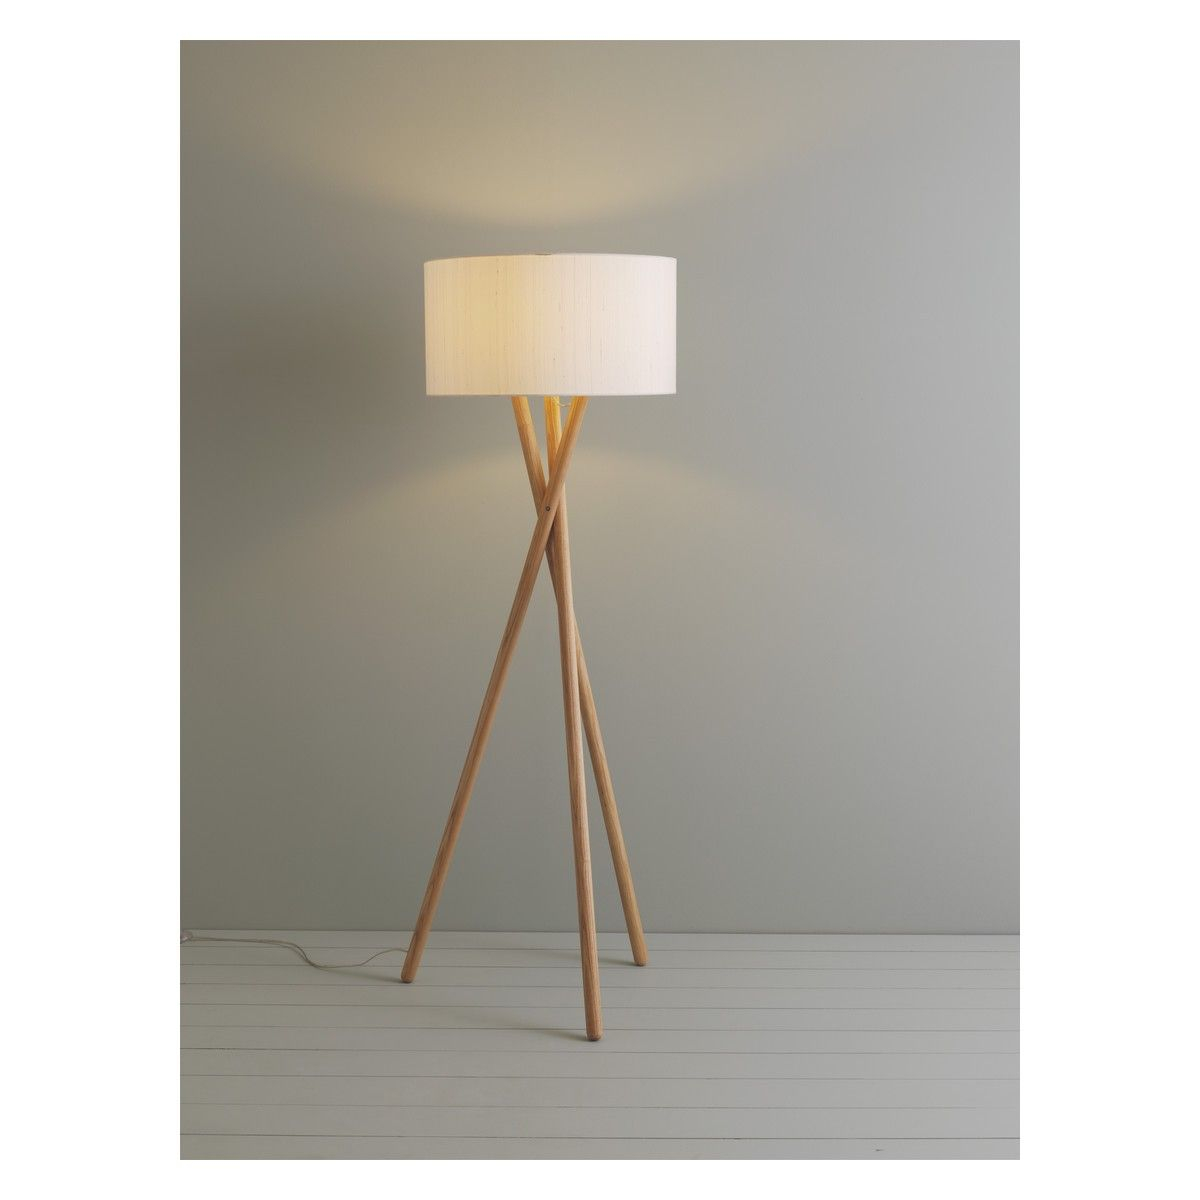 Lansbury Base Ash Wooden Tripod Floor Lamp Wooden Tripod throughout dimensions 1200 X 1200